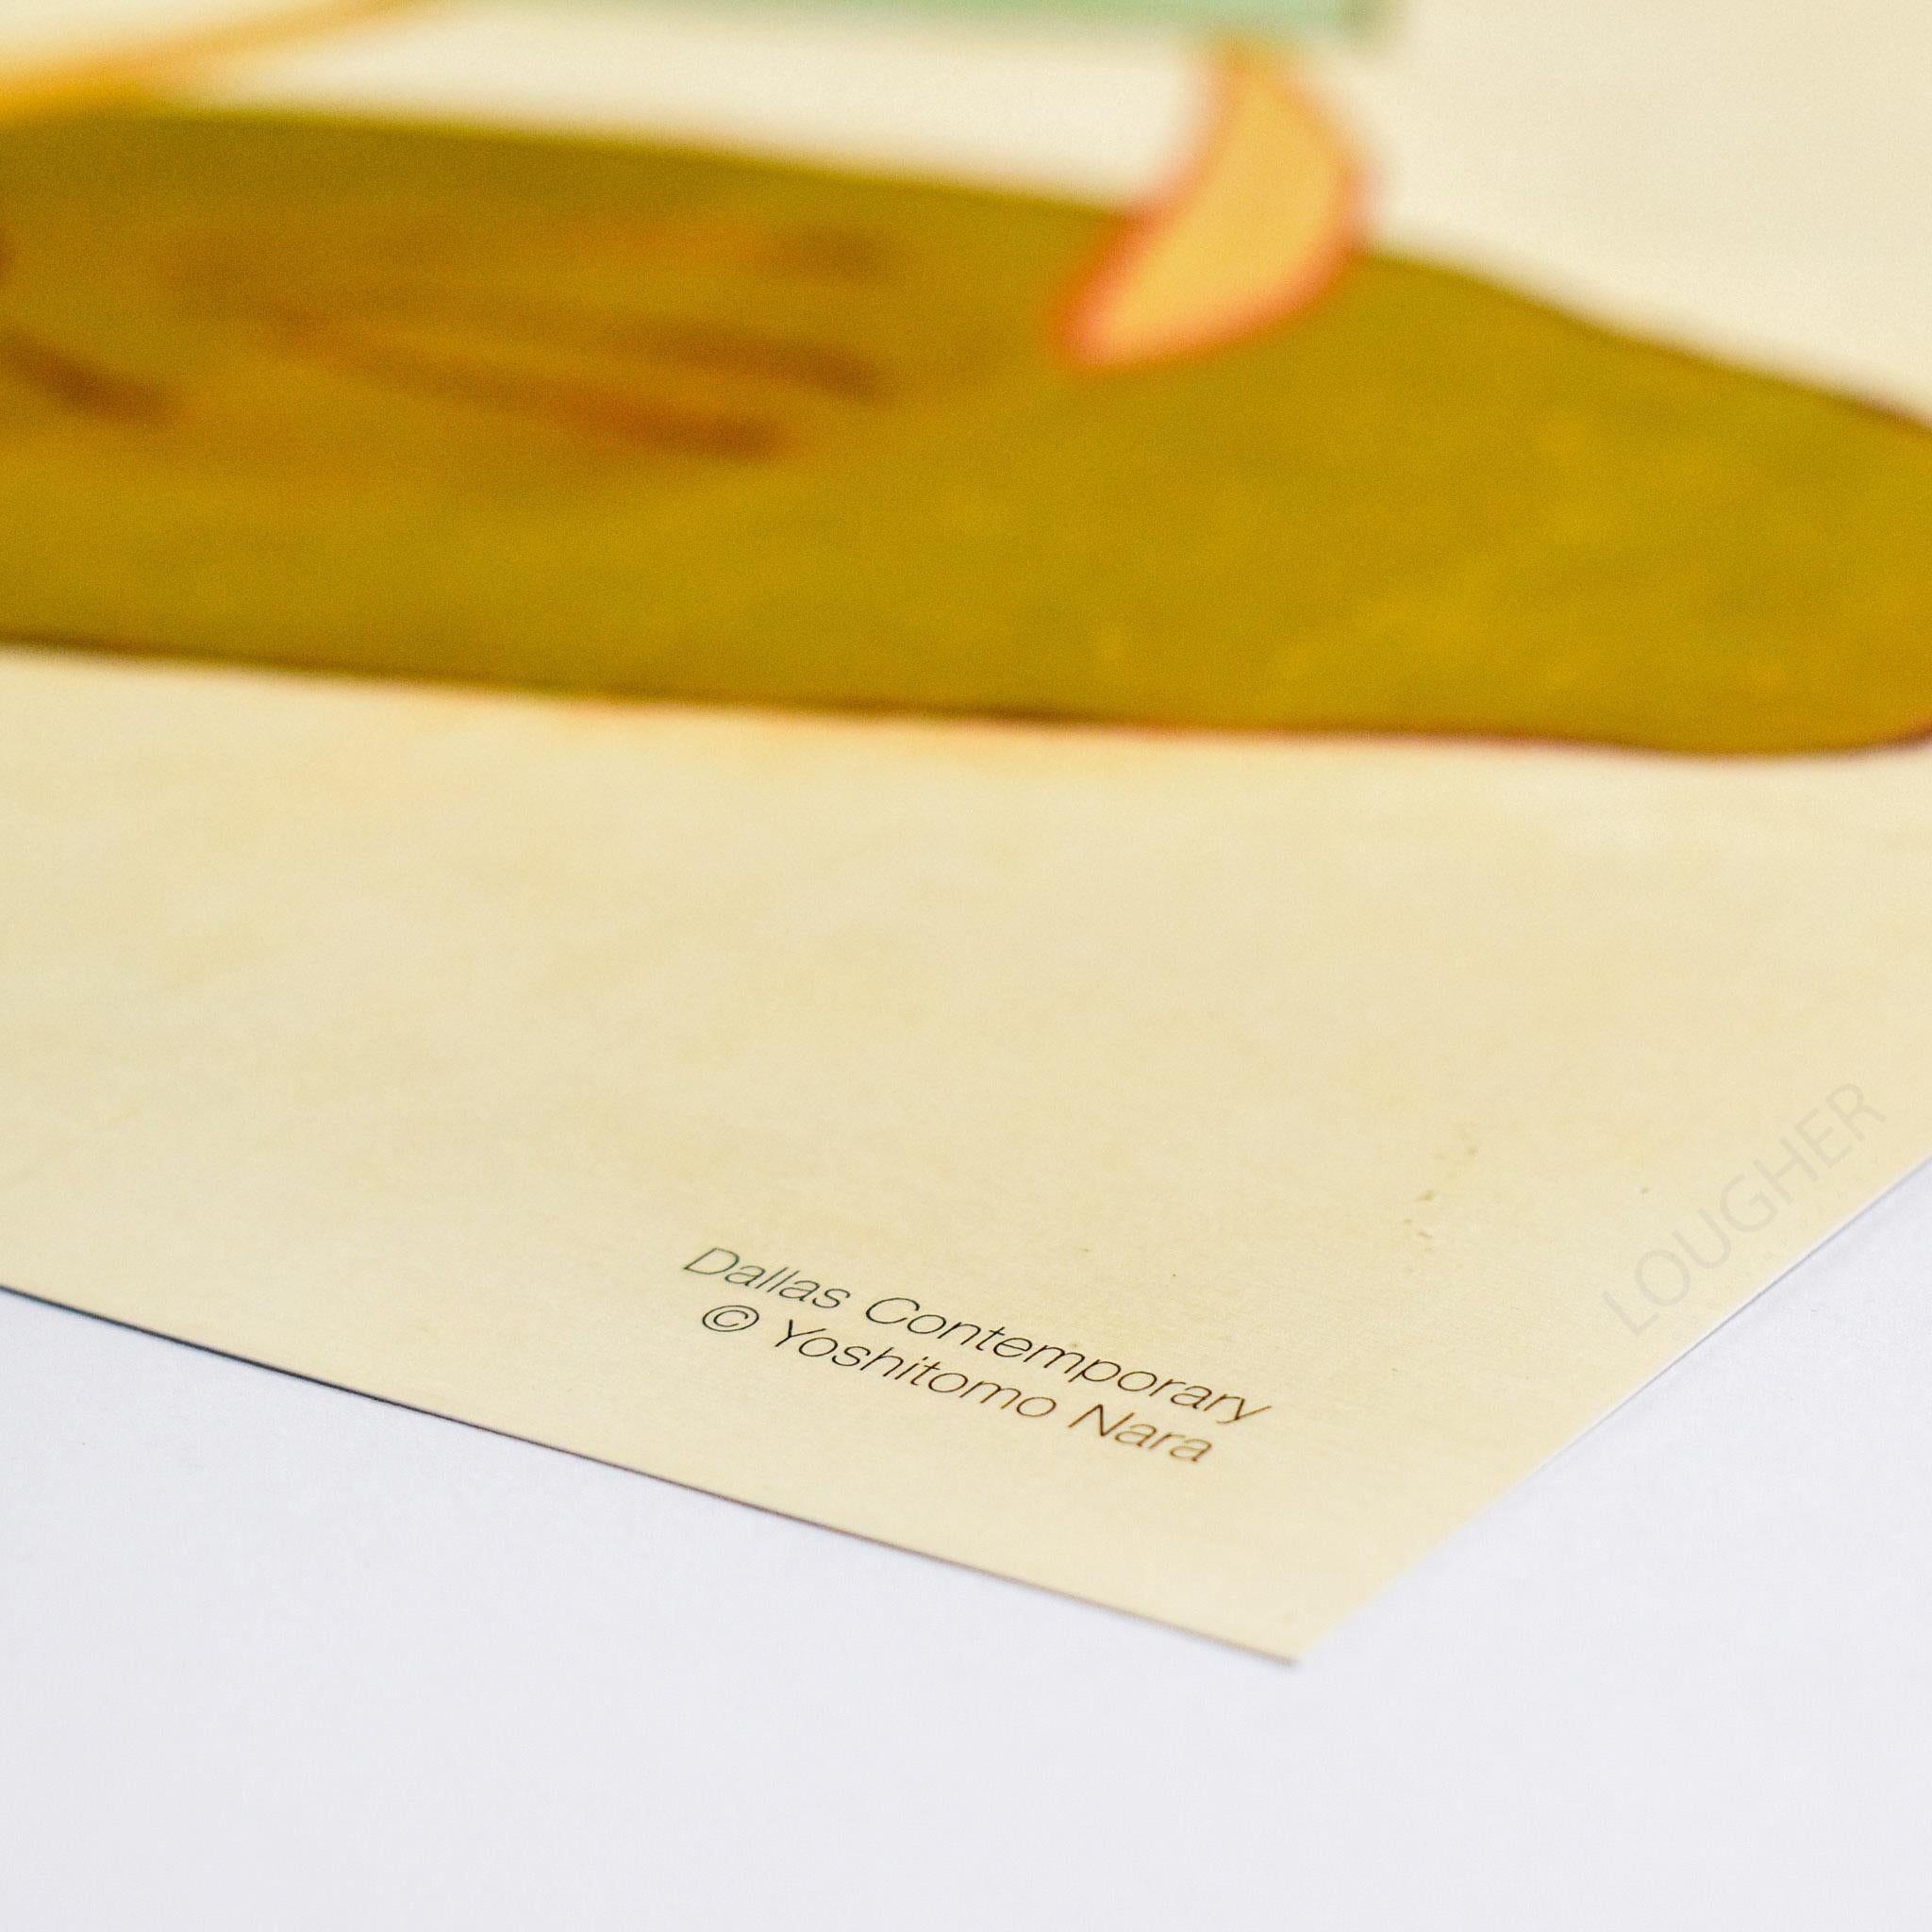 Marching on a Butterbur Leaf - Contemporary Print by Yoshitomo Nara